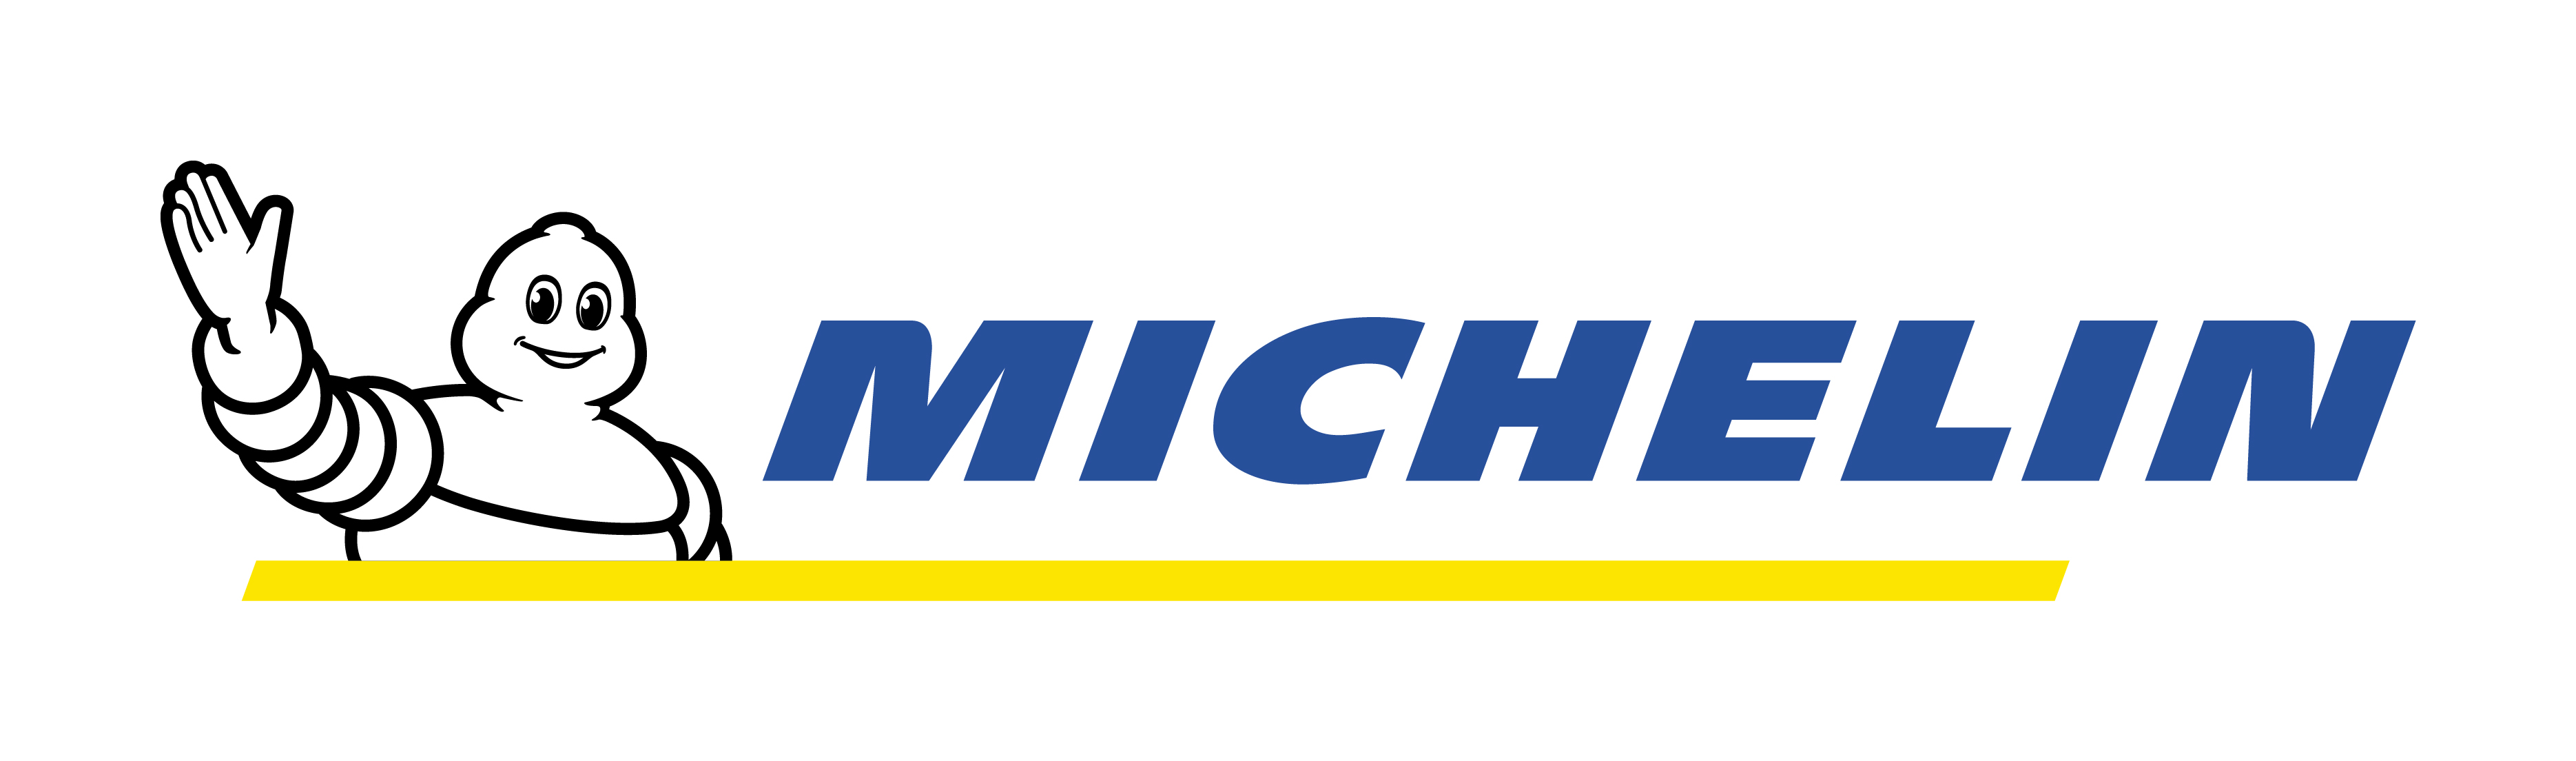 Pneus Michelin promotion Speedy